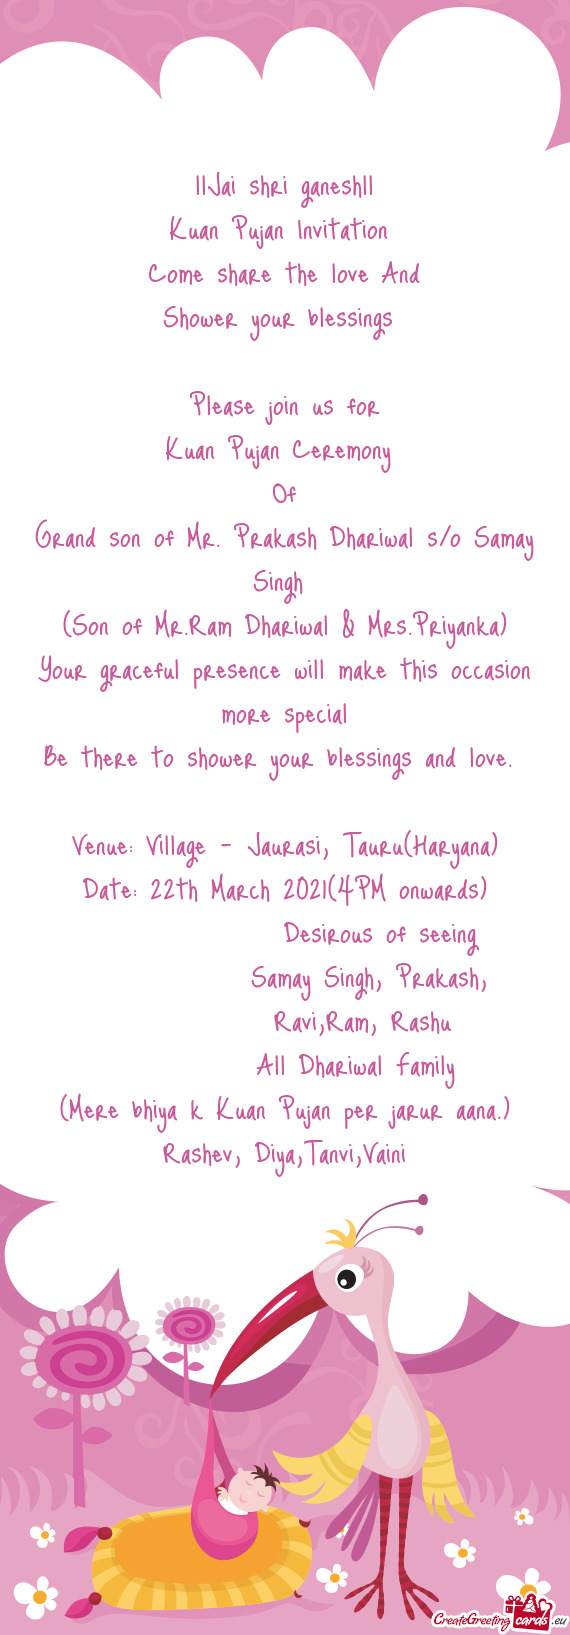 ||Jai shri ganesh||
 Kuan Pujan Invitation 
 Come share the love And
 Shower your blessings 
 
 Plea